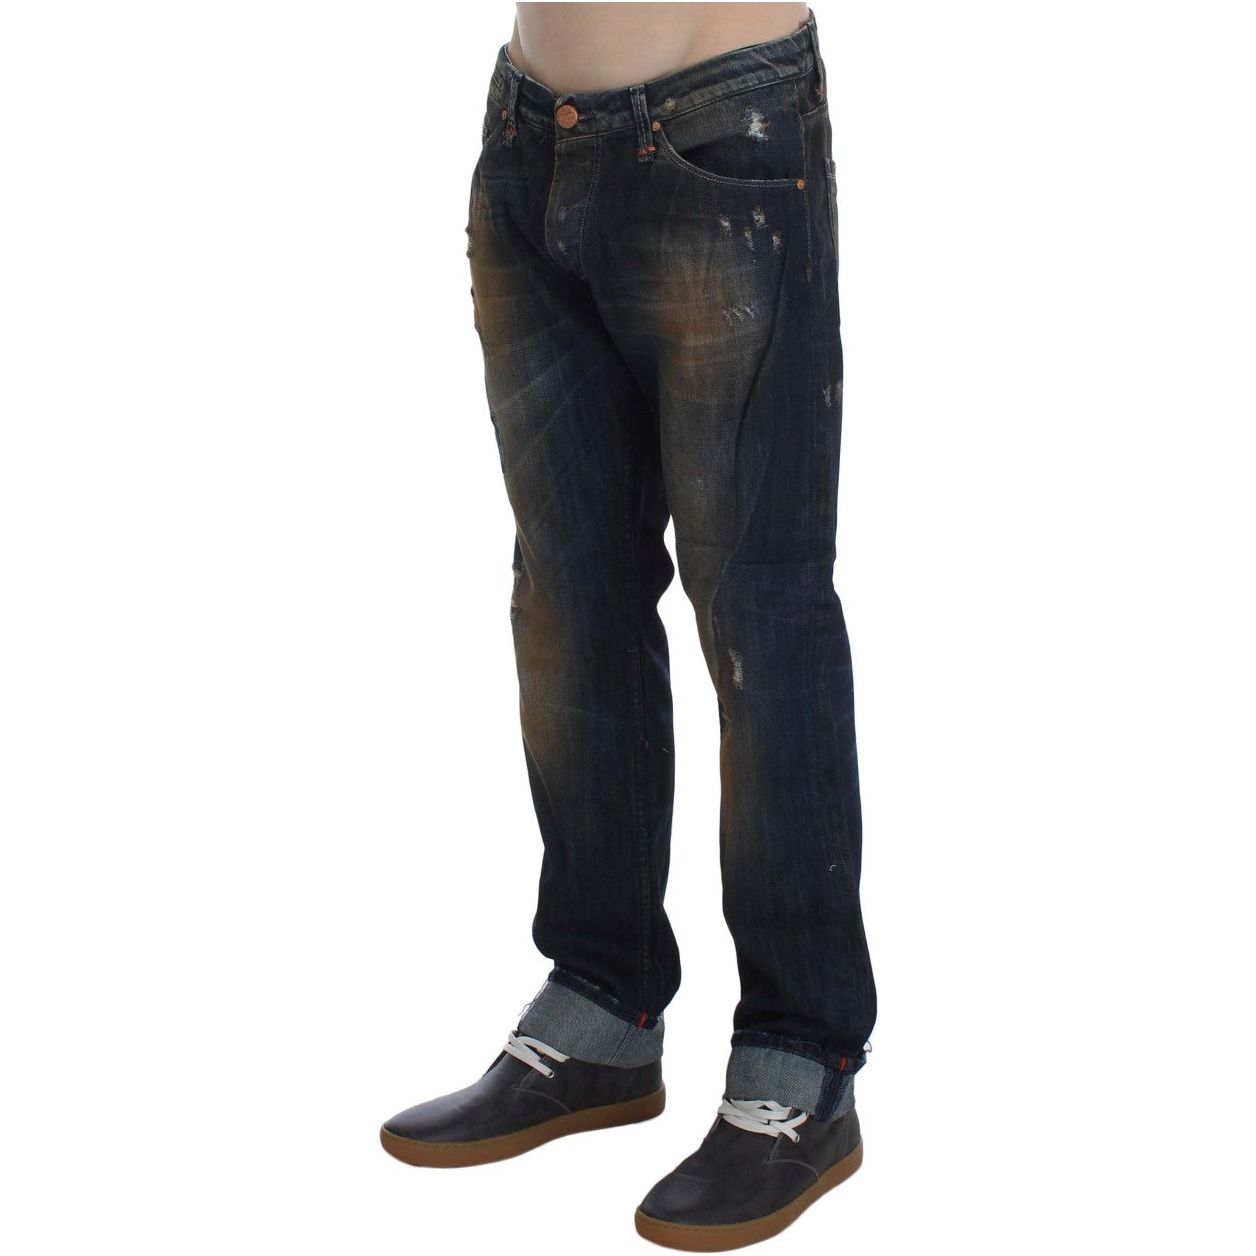 Acht Elegant Straight Fit Men's Denim Jeans blue-wash-cotton-regular-straight-fit-jeans-1 298995-blue-wash-cotton-regular-straight-fit-jeans-2-1.jpg